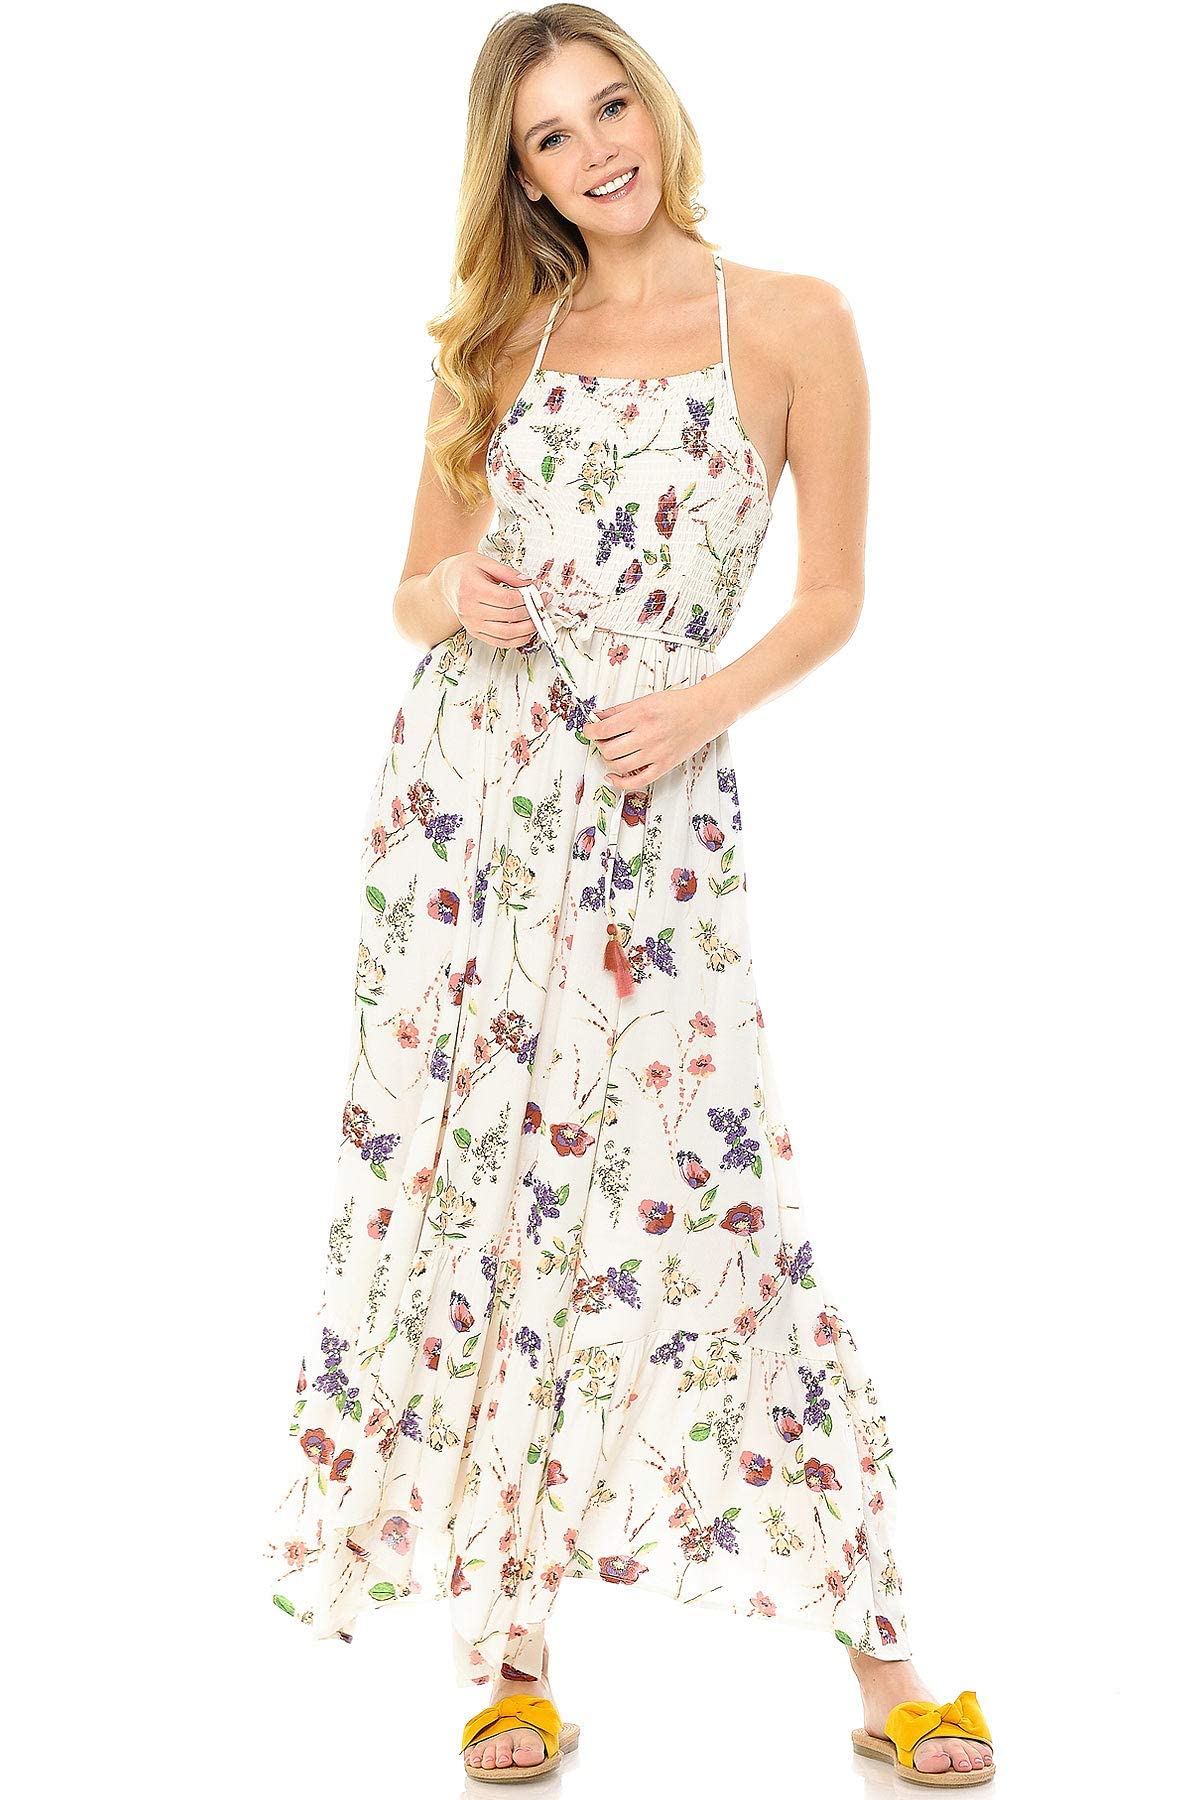 Serenity Floral Dress